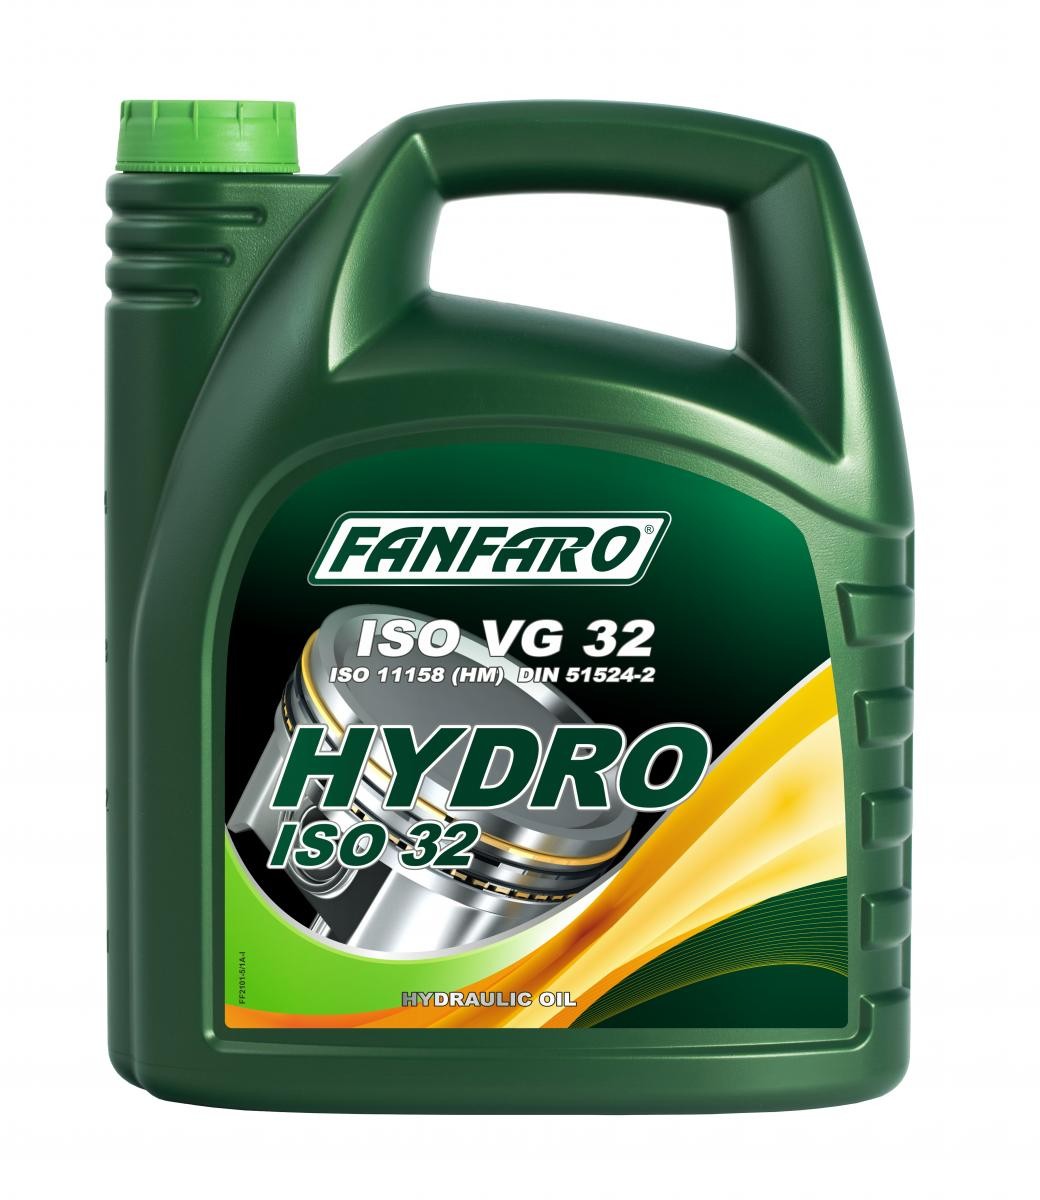 FANFARO Hydro, ISO 32 Inhalt: 5l ISO VG 32, DIN 51524-2 HLP, ISO 11158 HM Hydrauliköl FF2101-5 kaufen